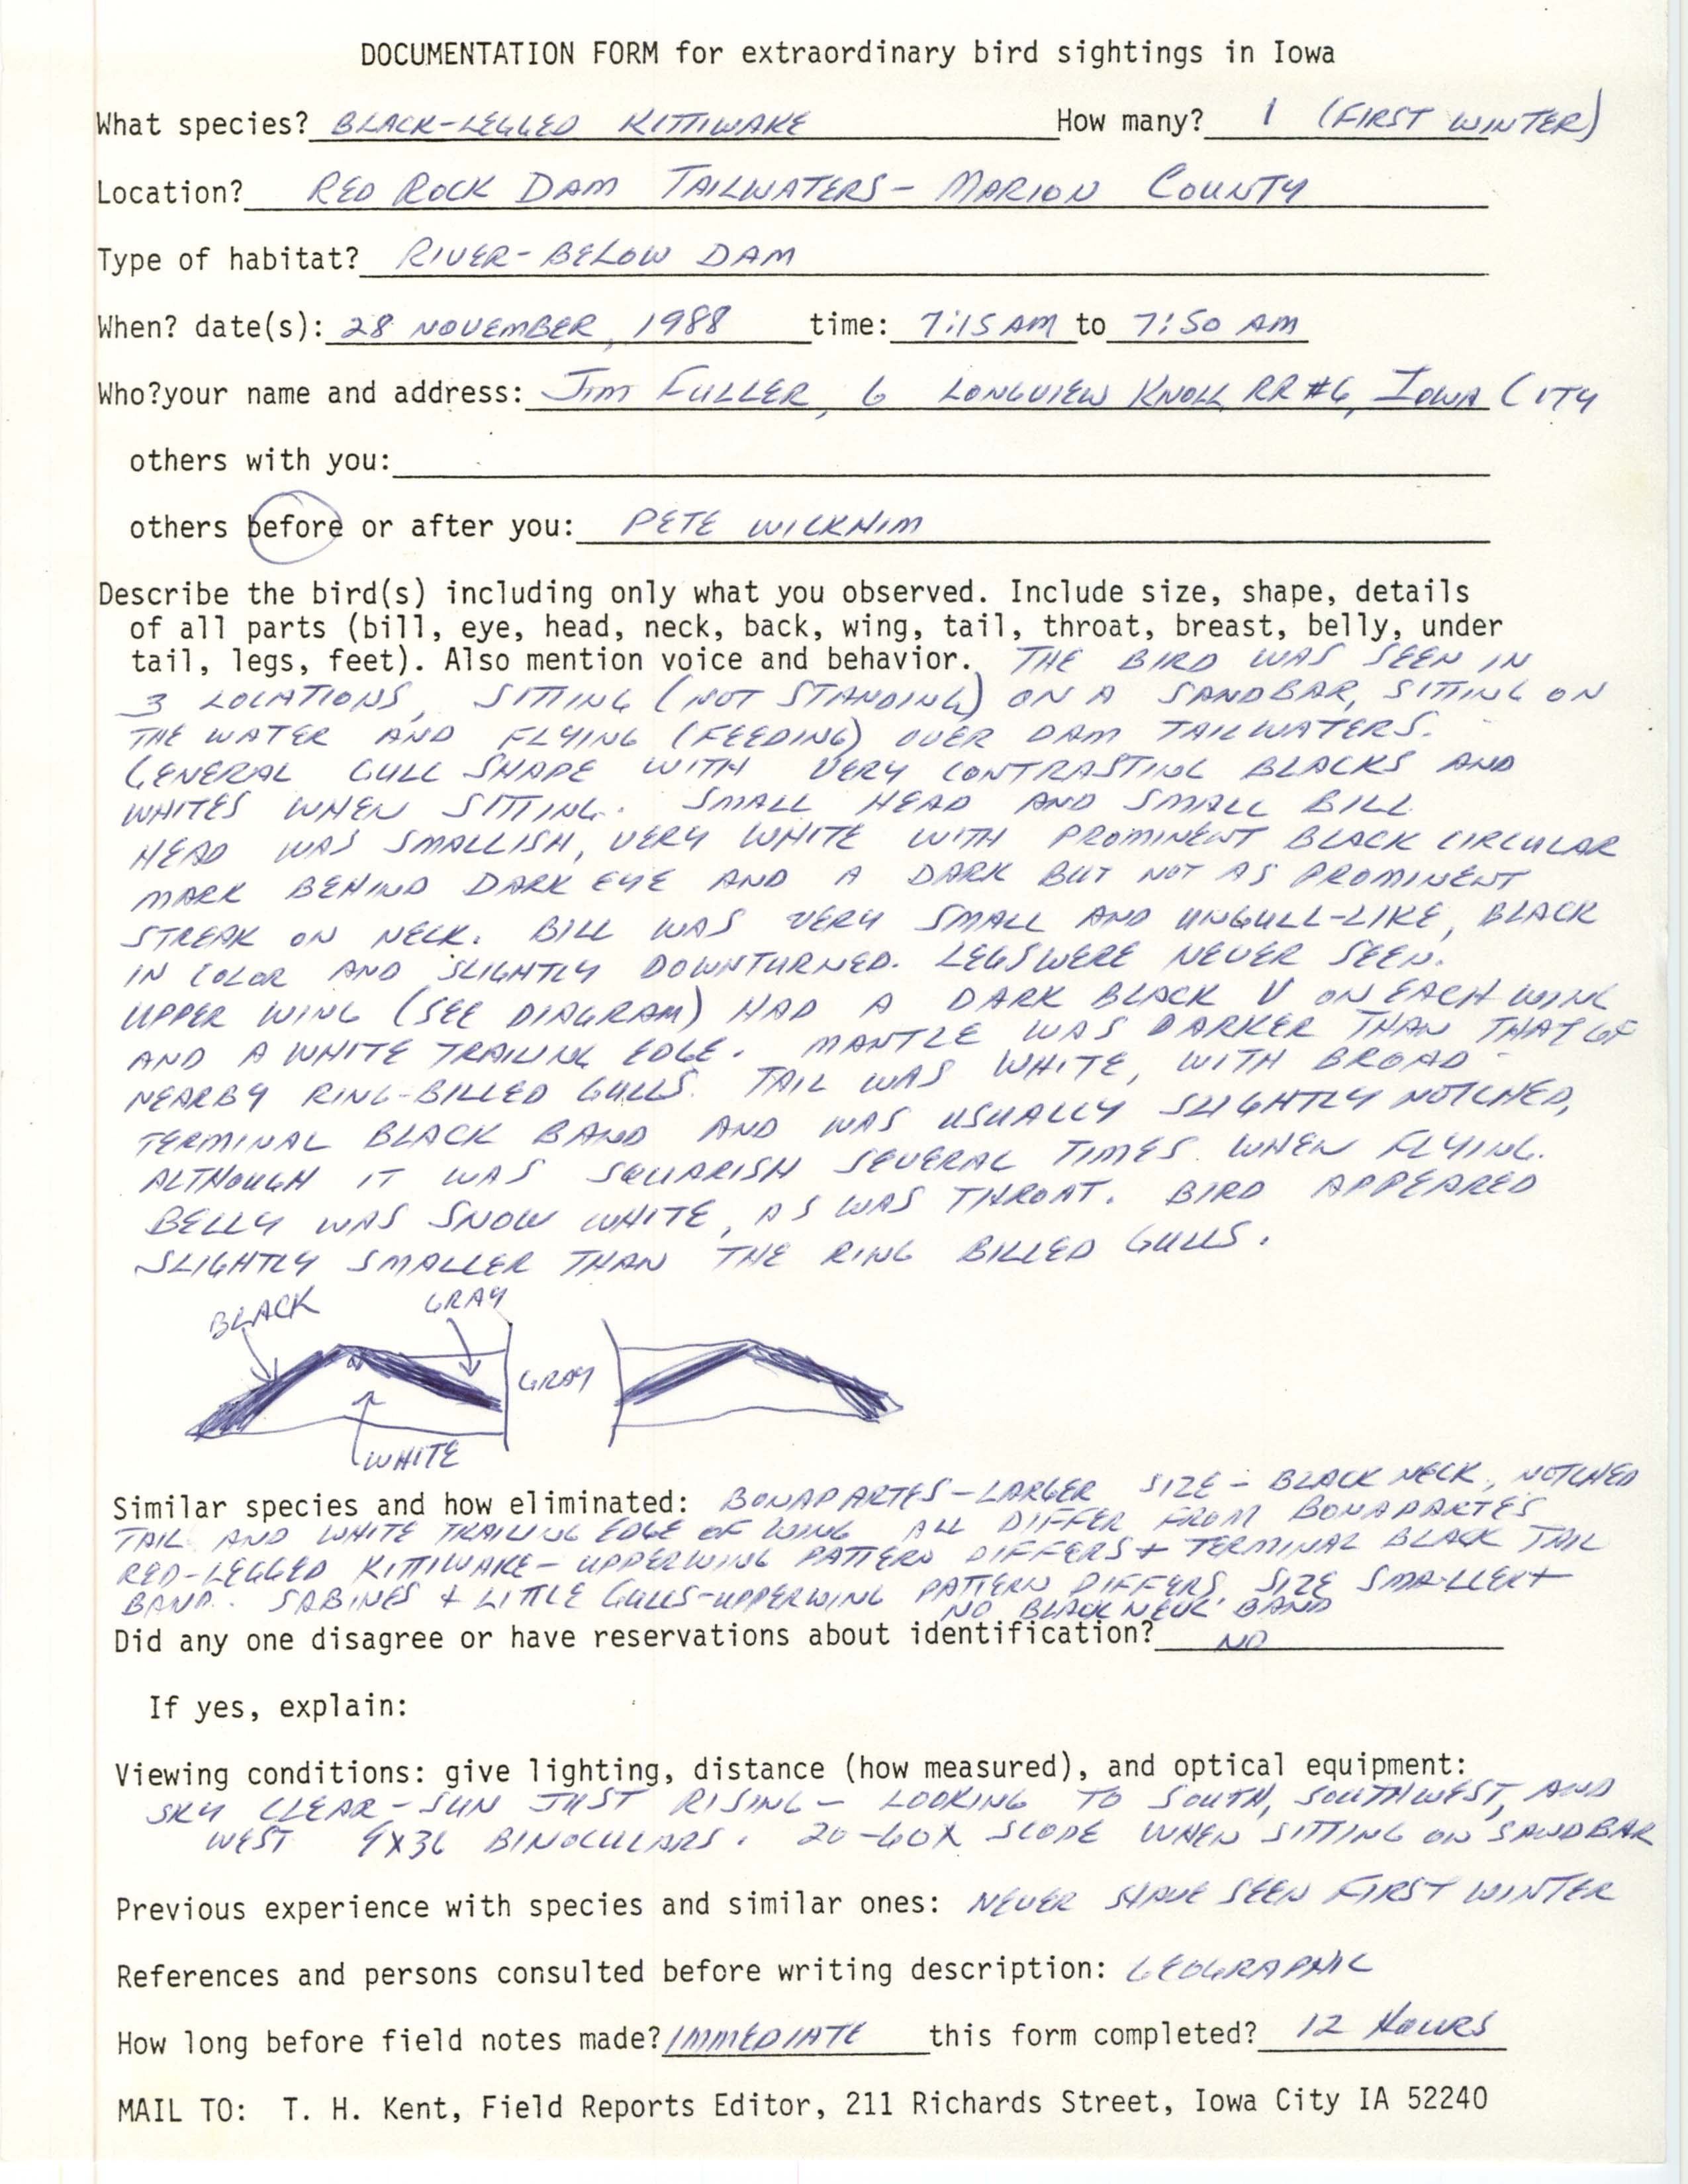 Rare bird documentation form for Black-legged Kittiwake at Red Rock Dam in 1988